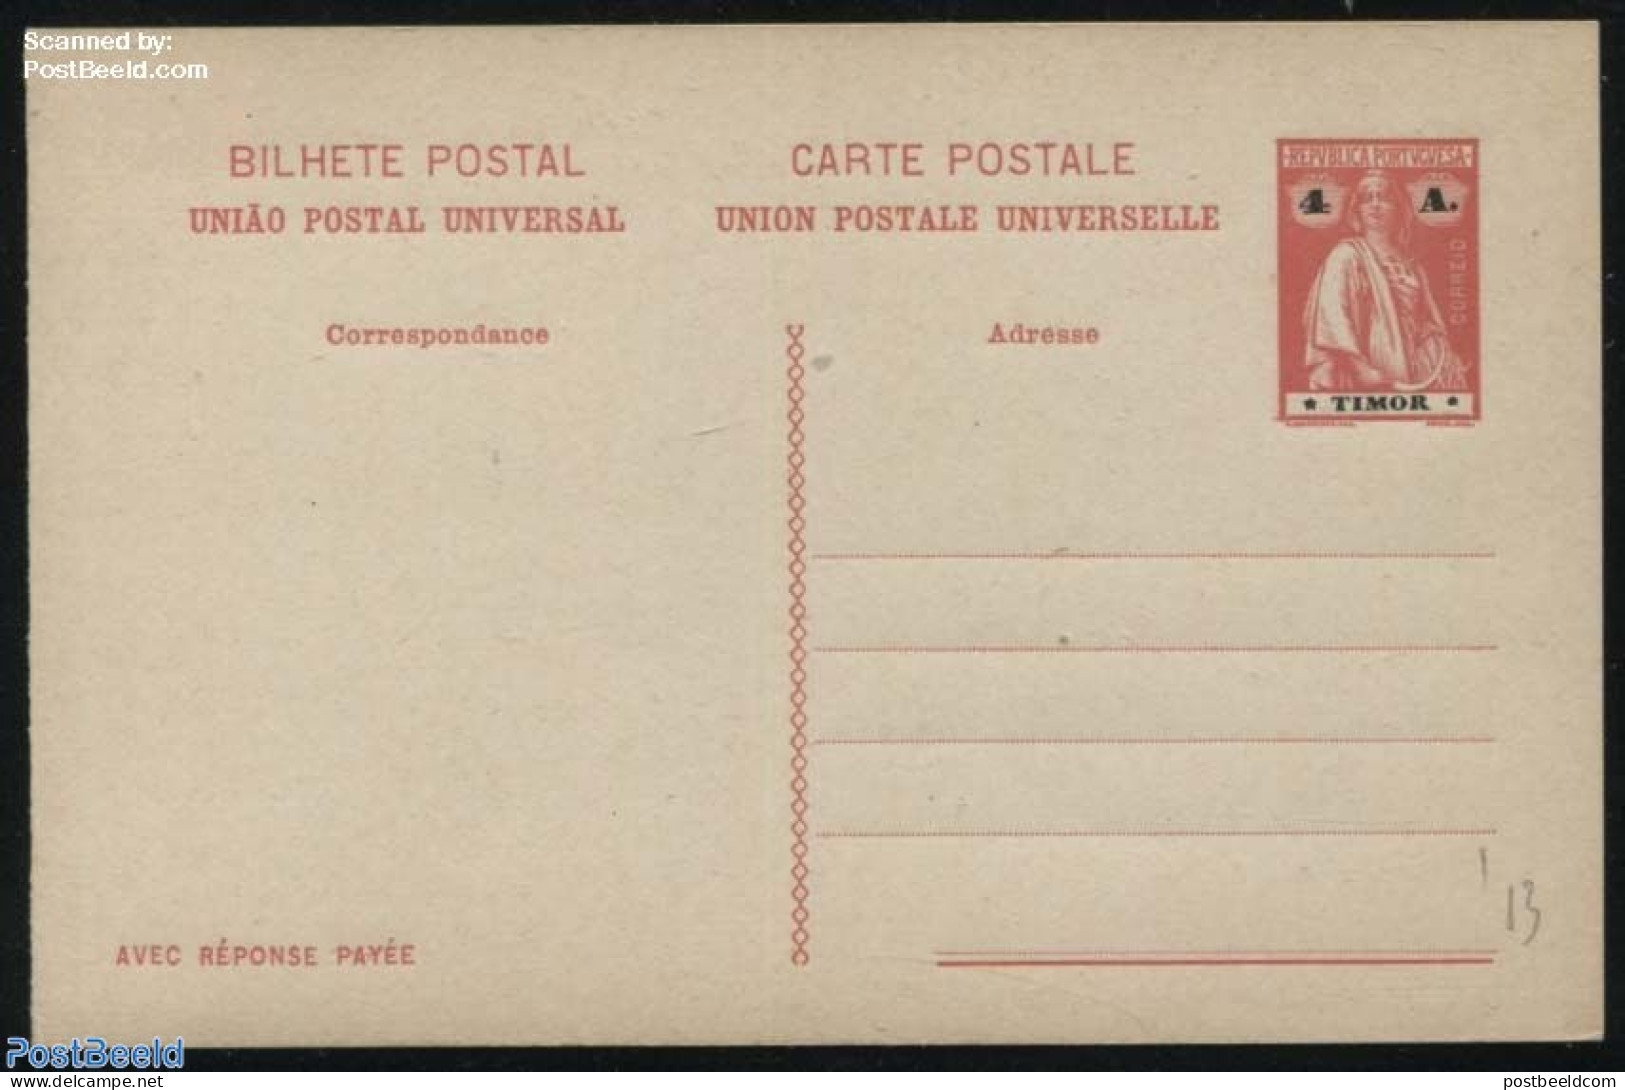 Timor 1913 Reply Paid Postcard  4/4A, Unused Postal Stationary - East Timor